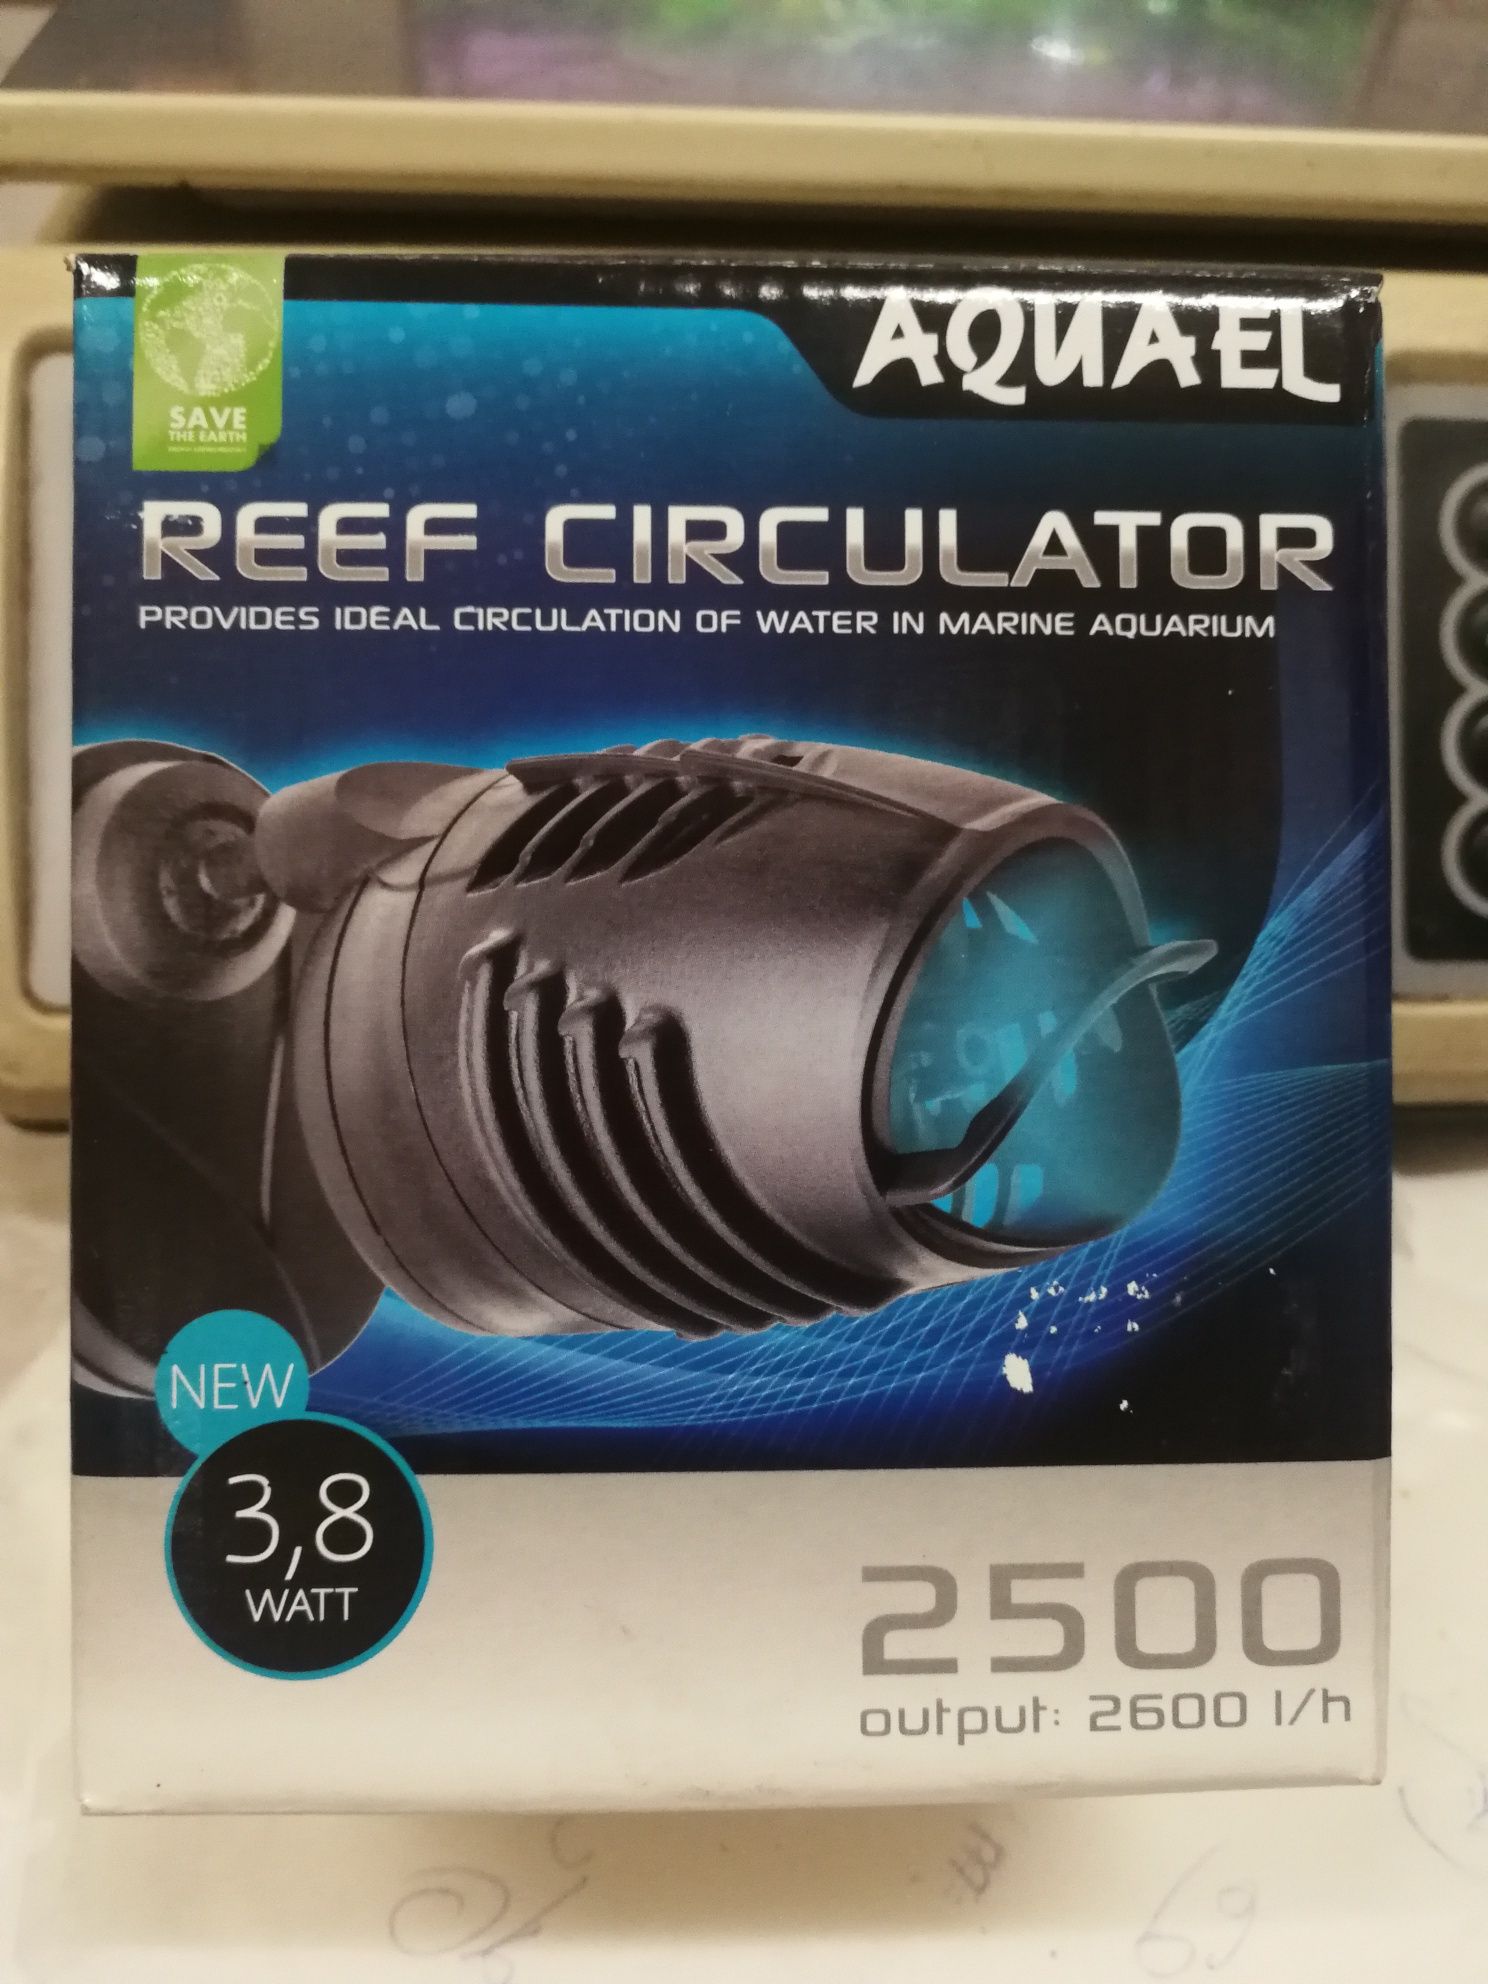 Reef Circulator 2500 aquael